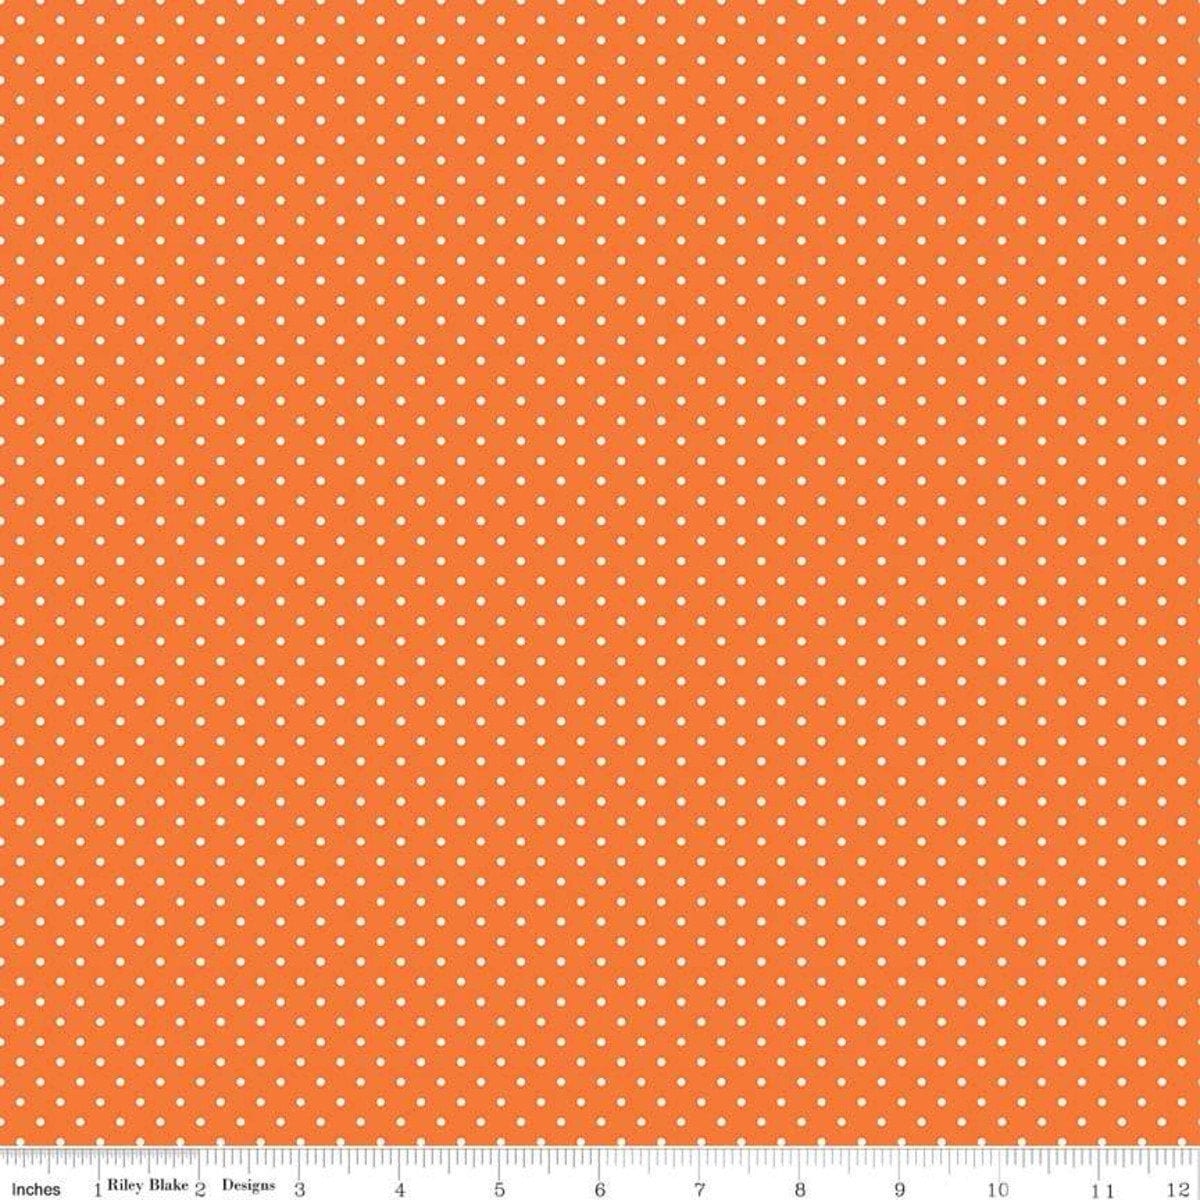 Swiss Dot Orange by Riley Blake Designs